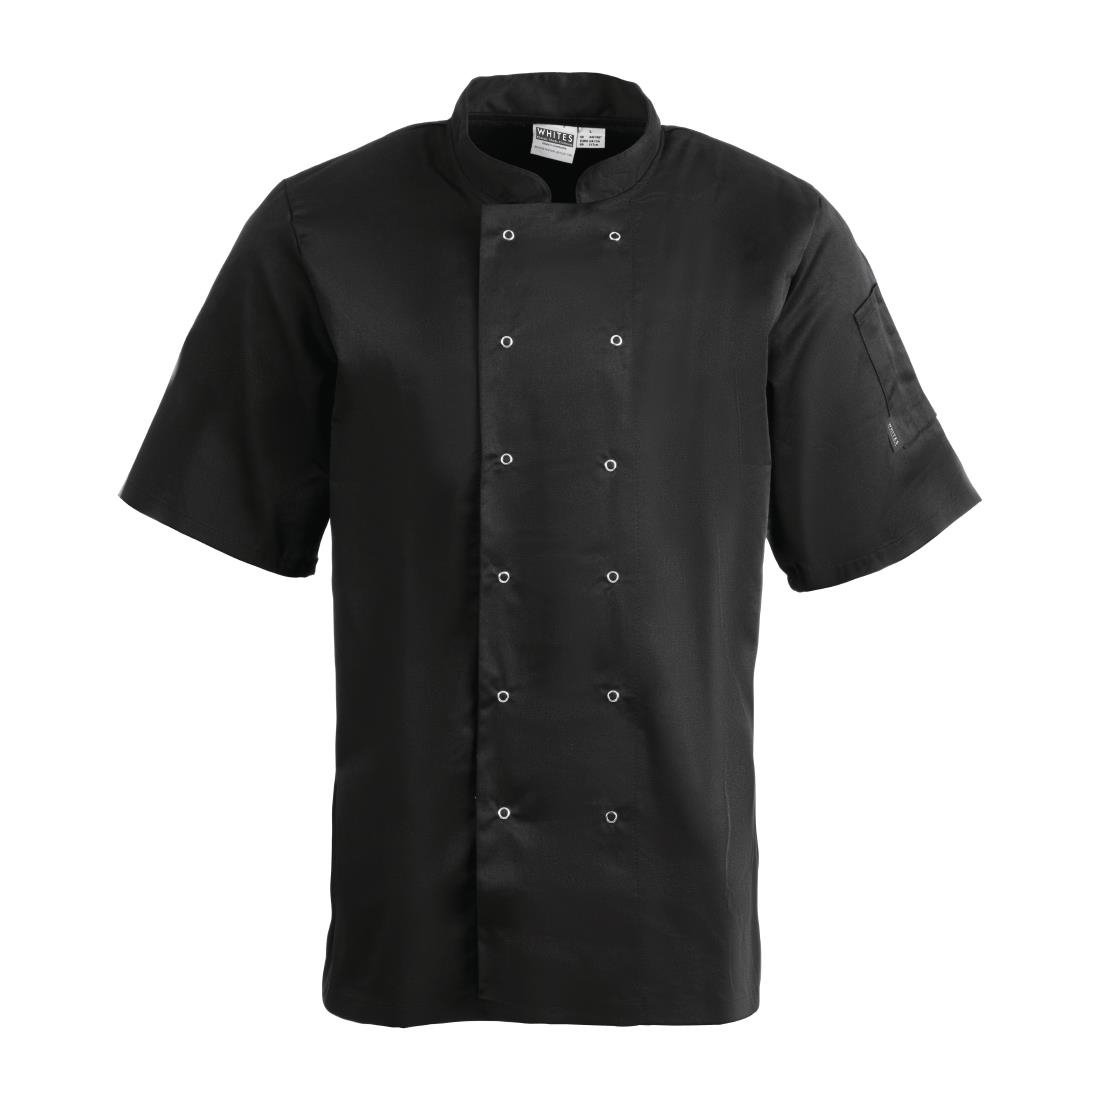 A439-XL Whites Vegas Unisex Chefs Jacket Short Sleeve Black XL JD Catering Equipment Solutions Ltd